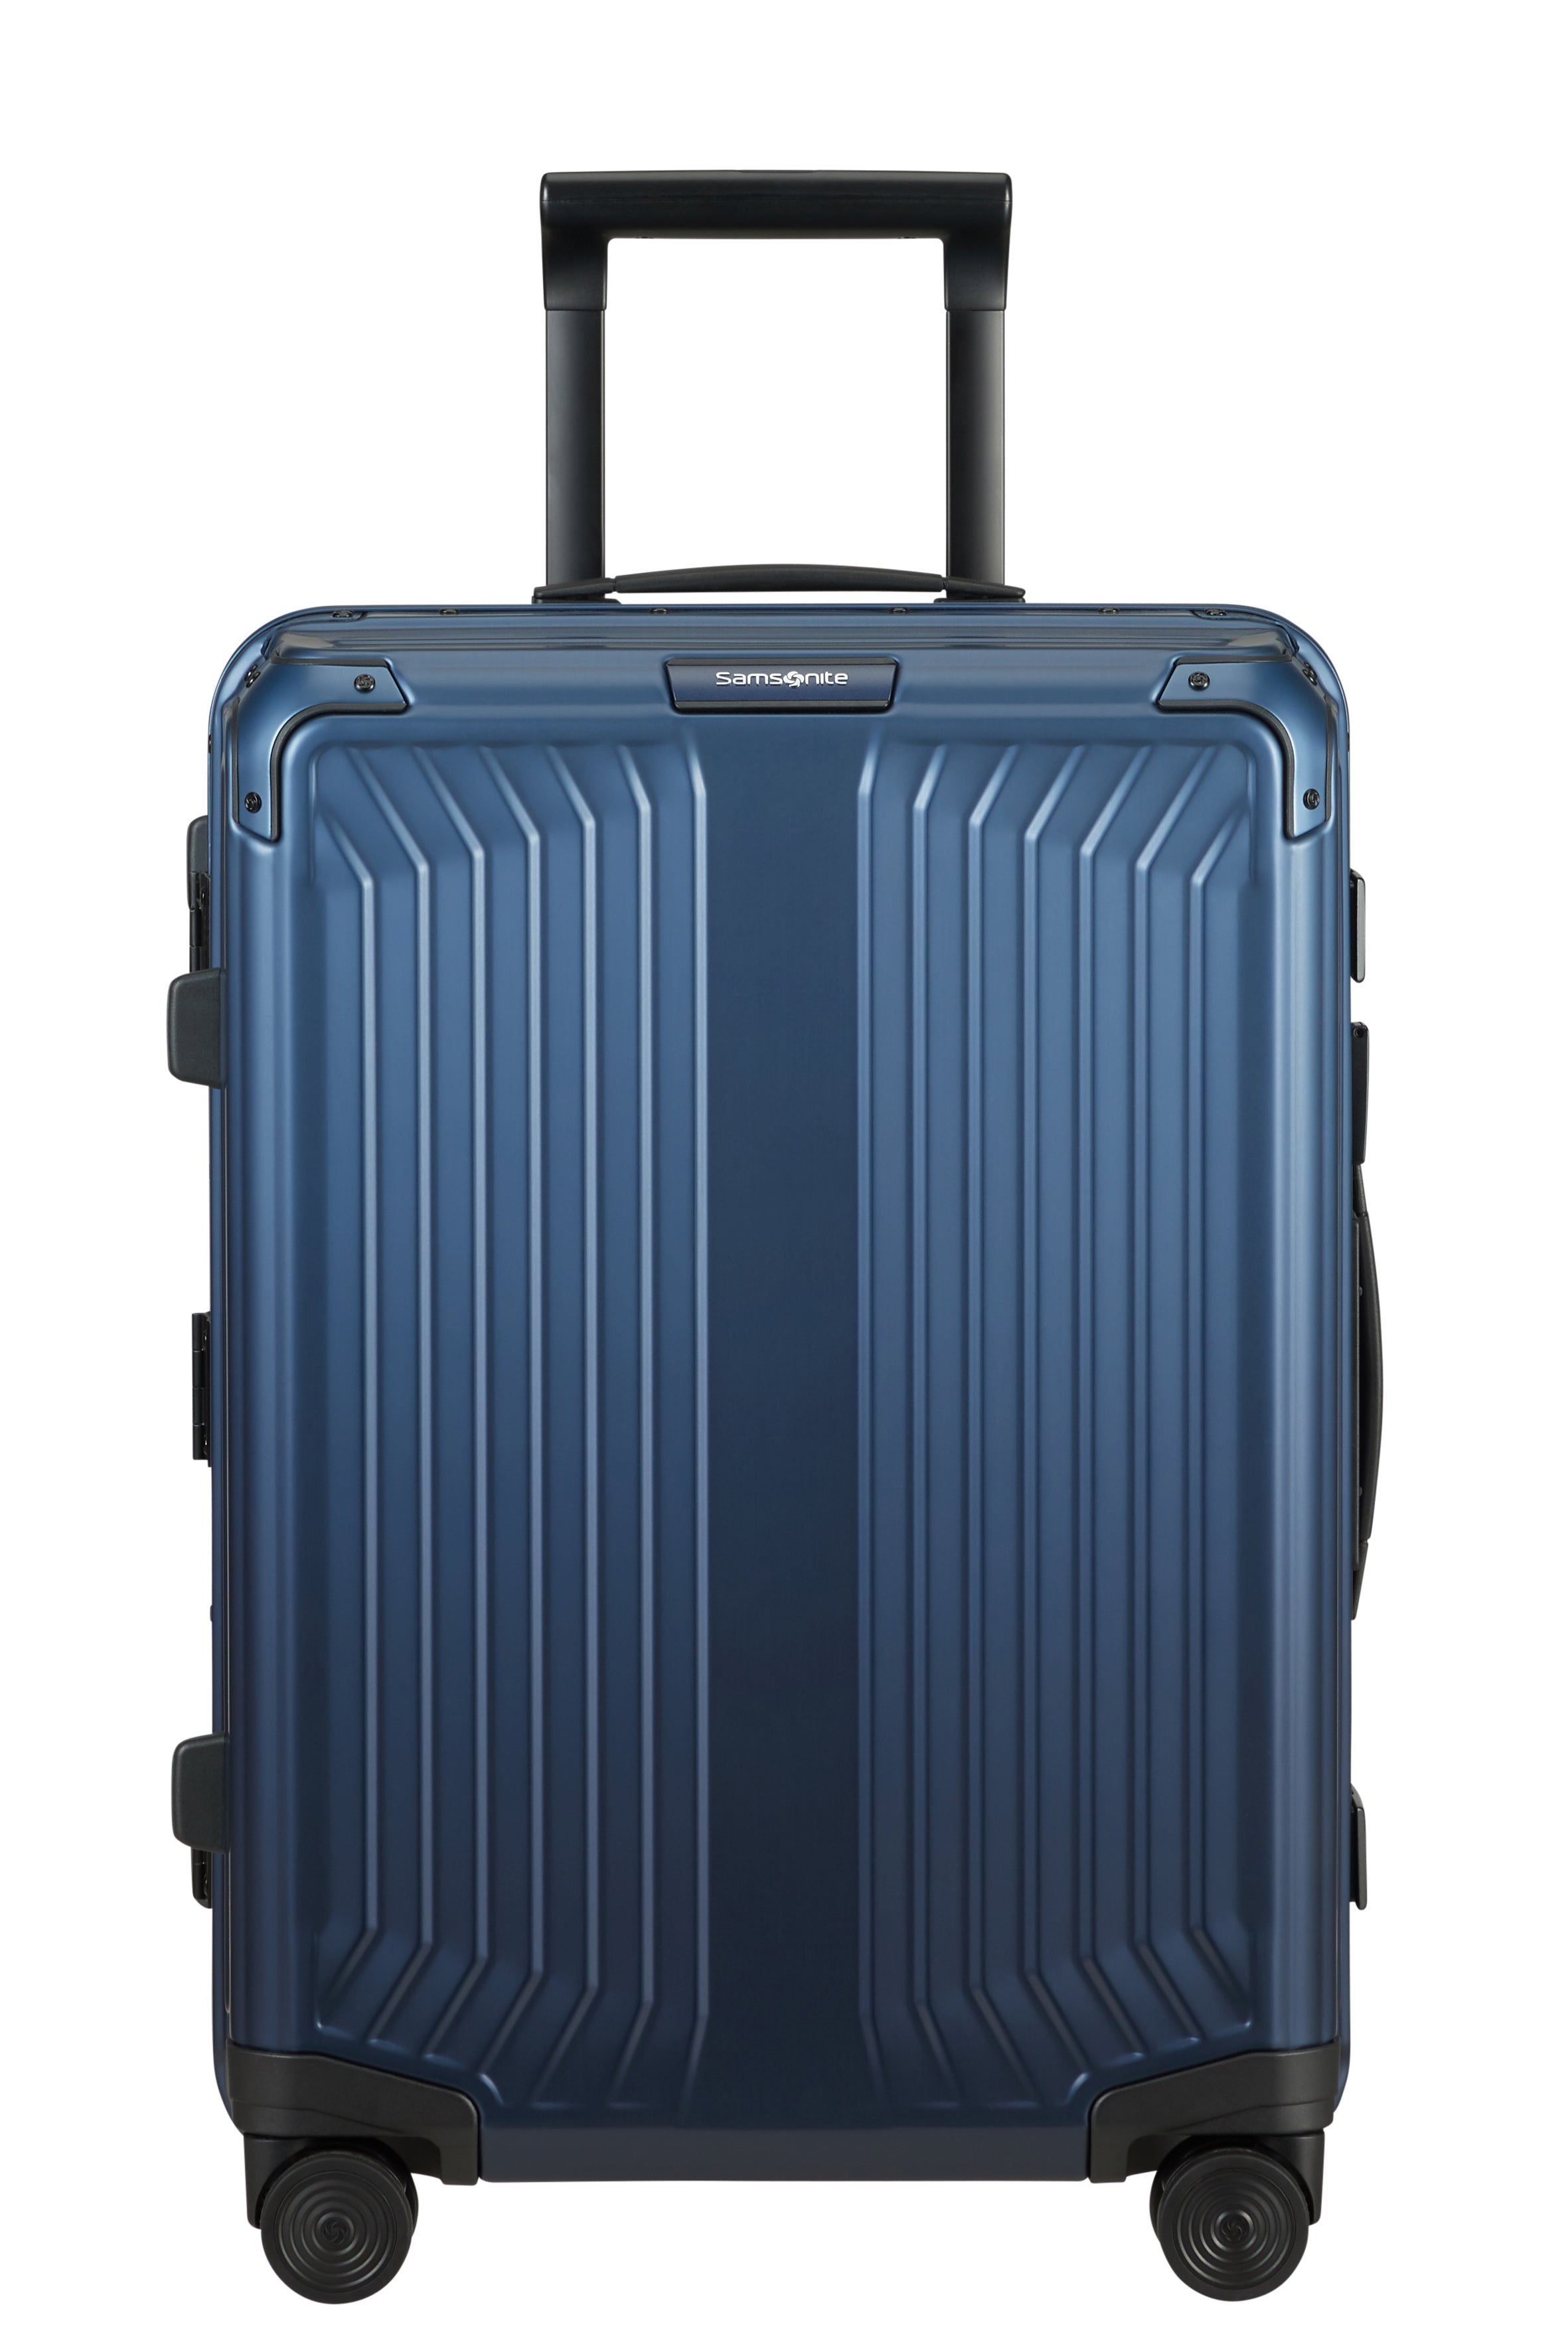 Samsonite - Lite Box ALU 55cm Small 4 Wheel Hard Suitcase - Gradient Midnight-4